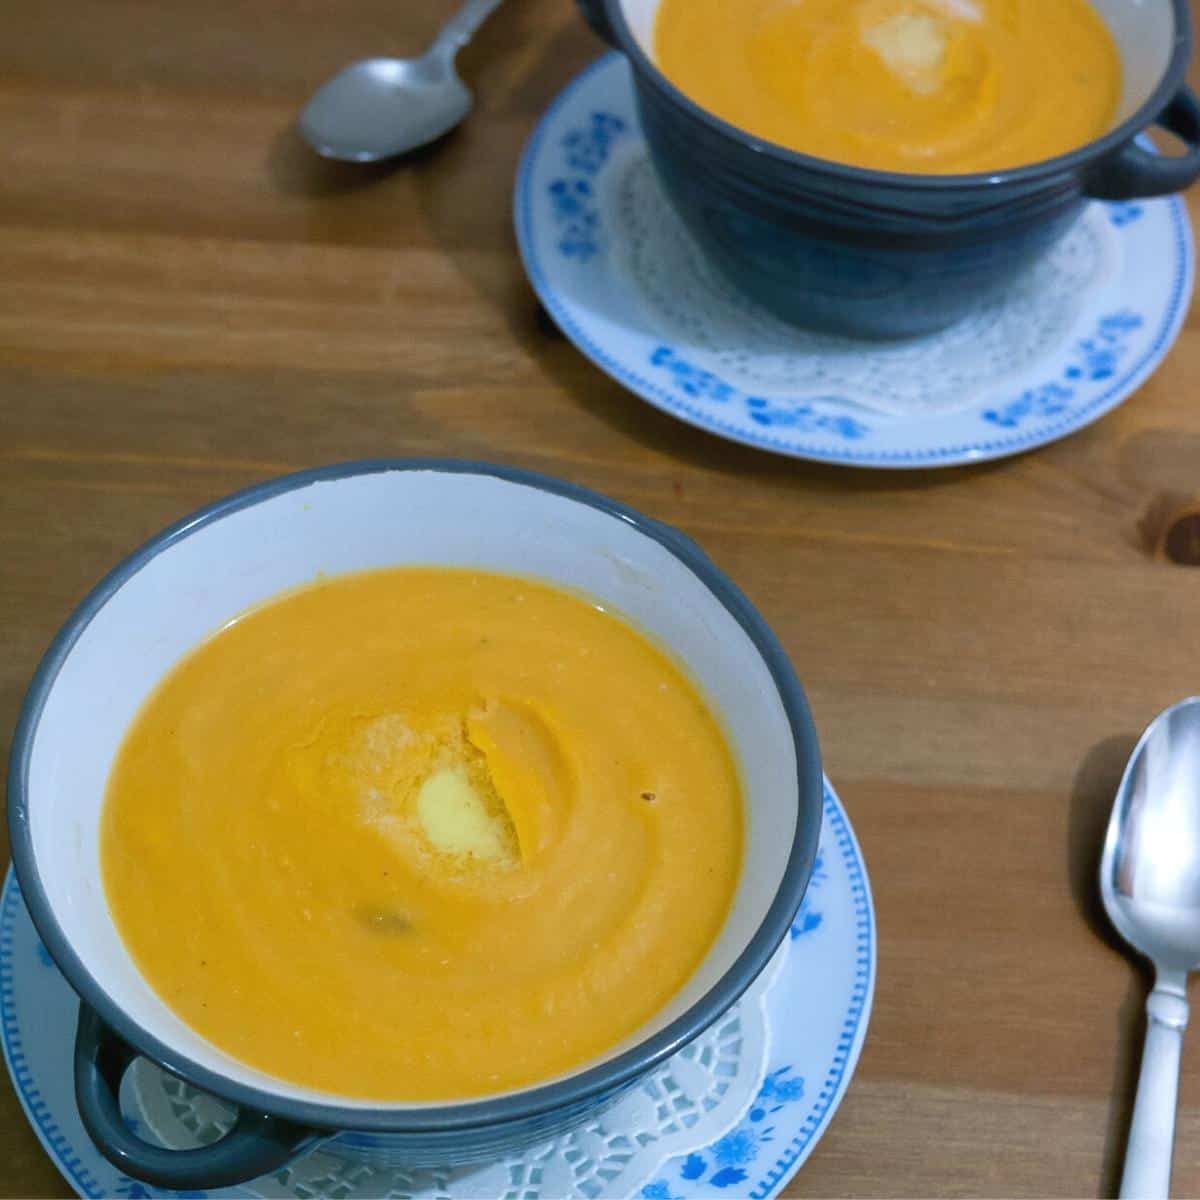 Two soup bowls with sweet potato soup.